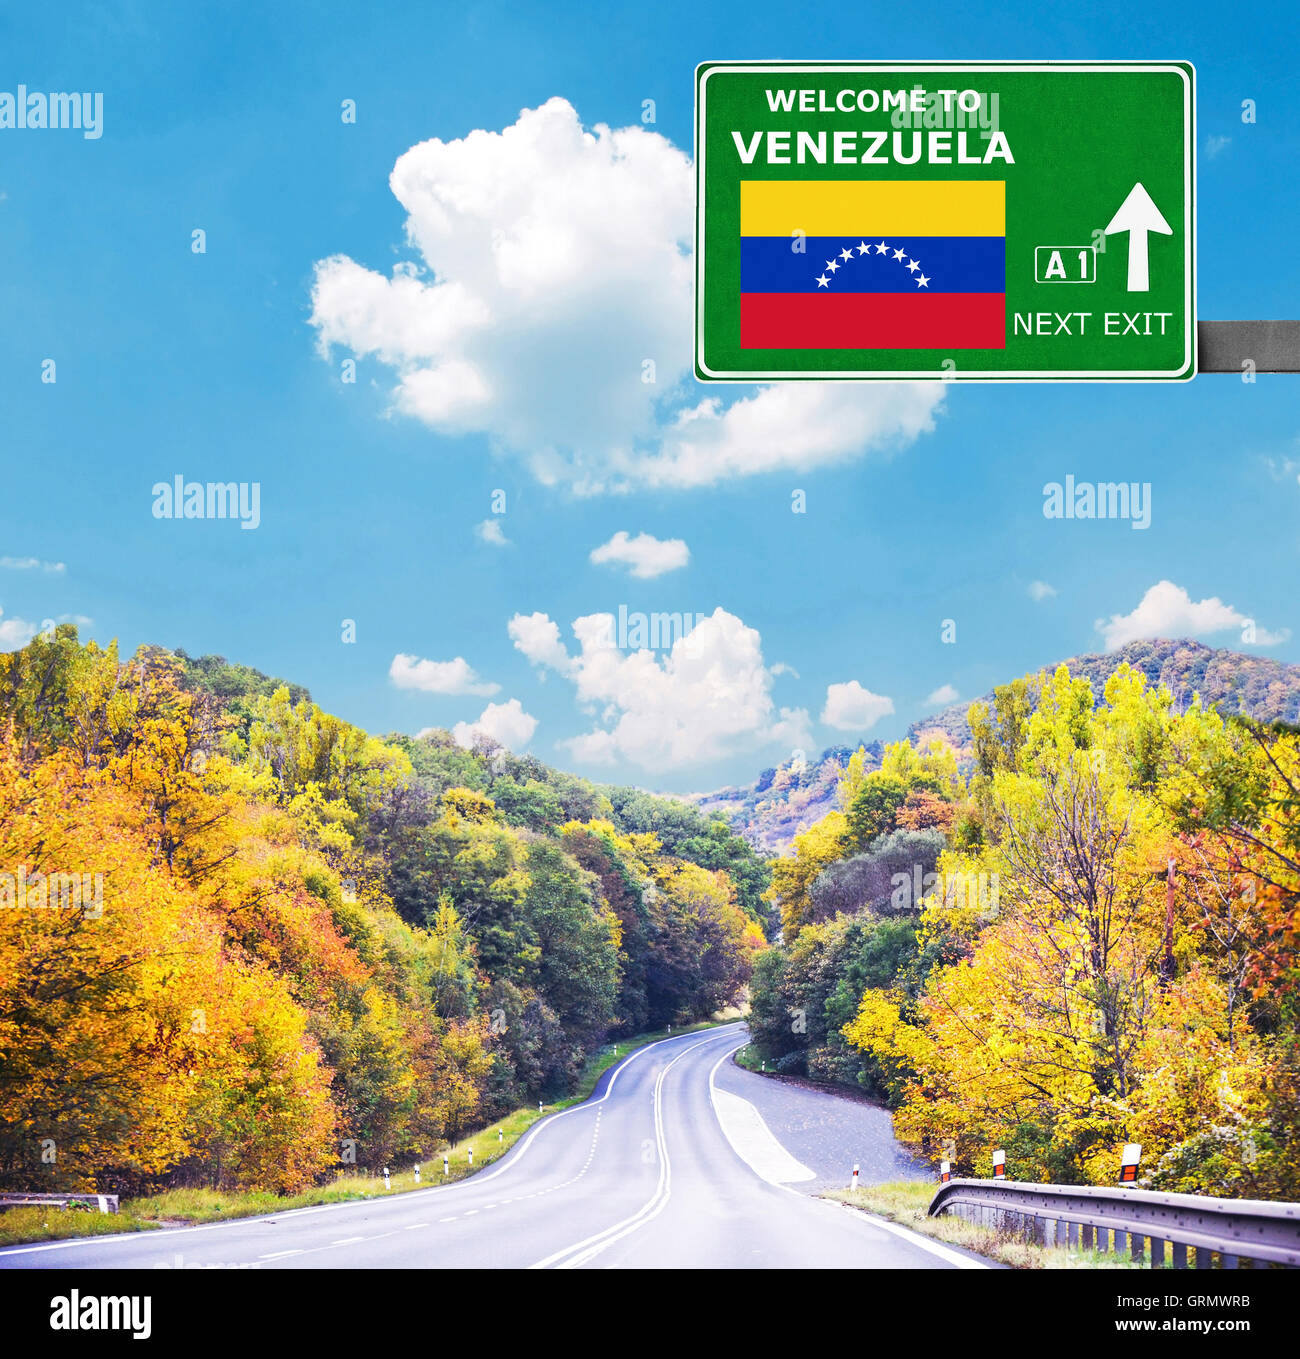 Venezuela-Schild gegen klar blauen Himmel Stockfoto